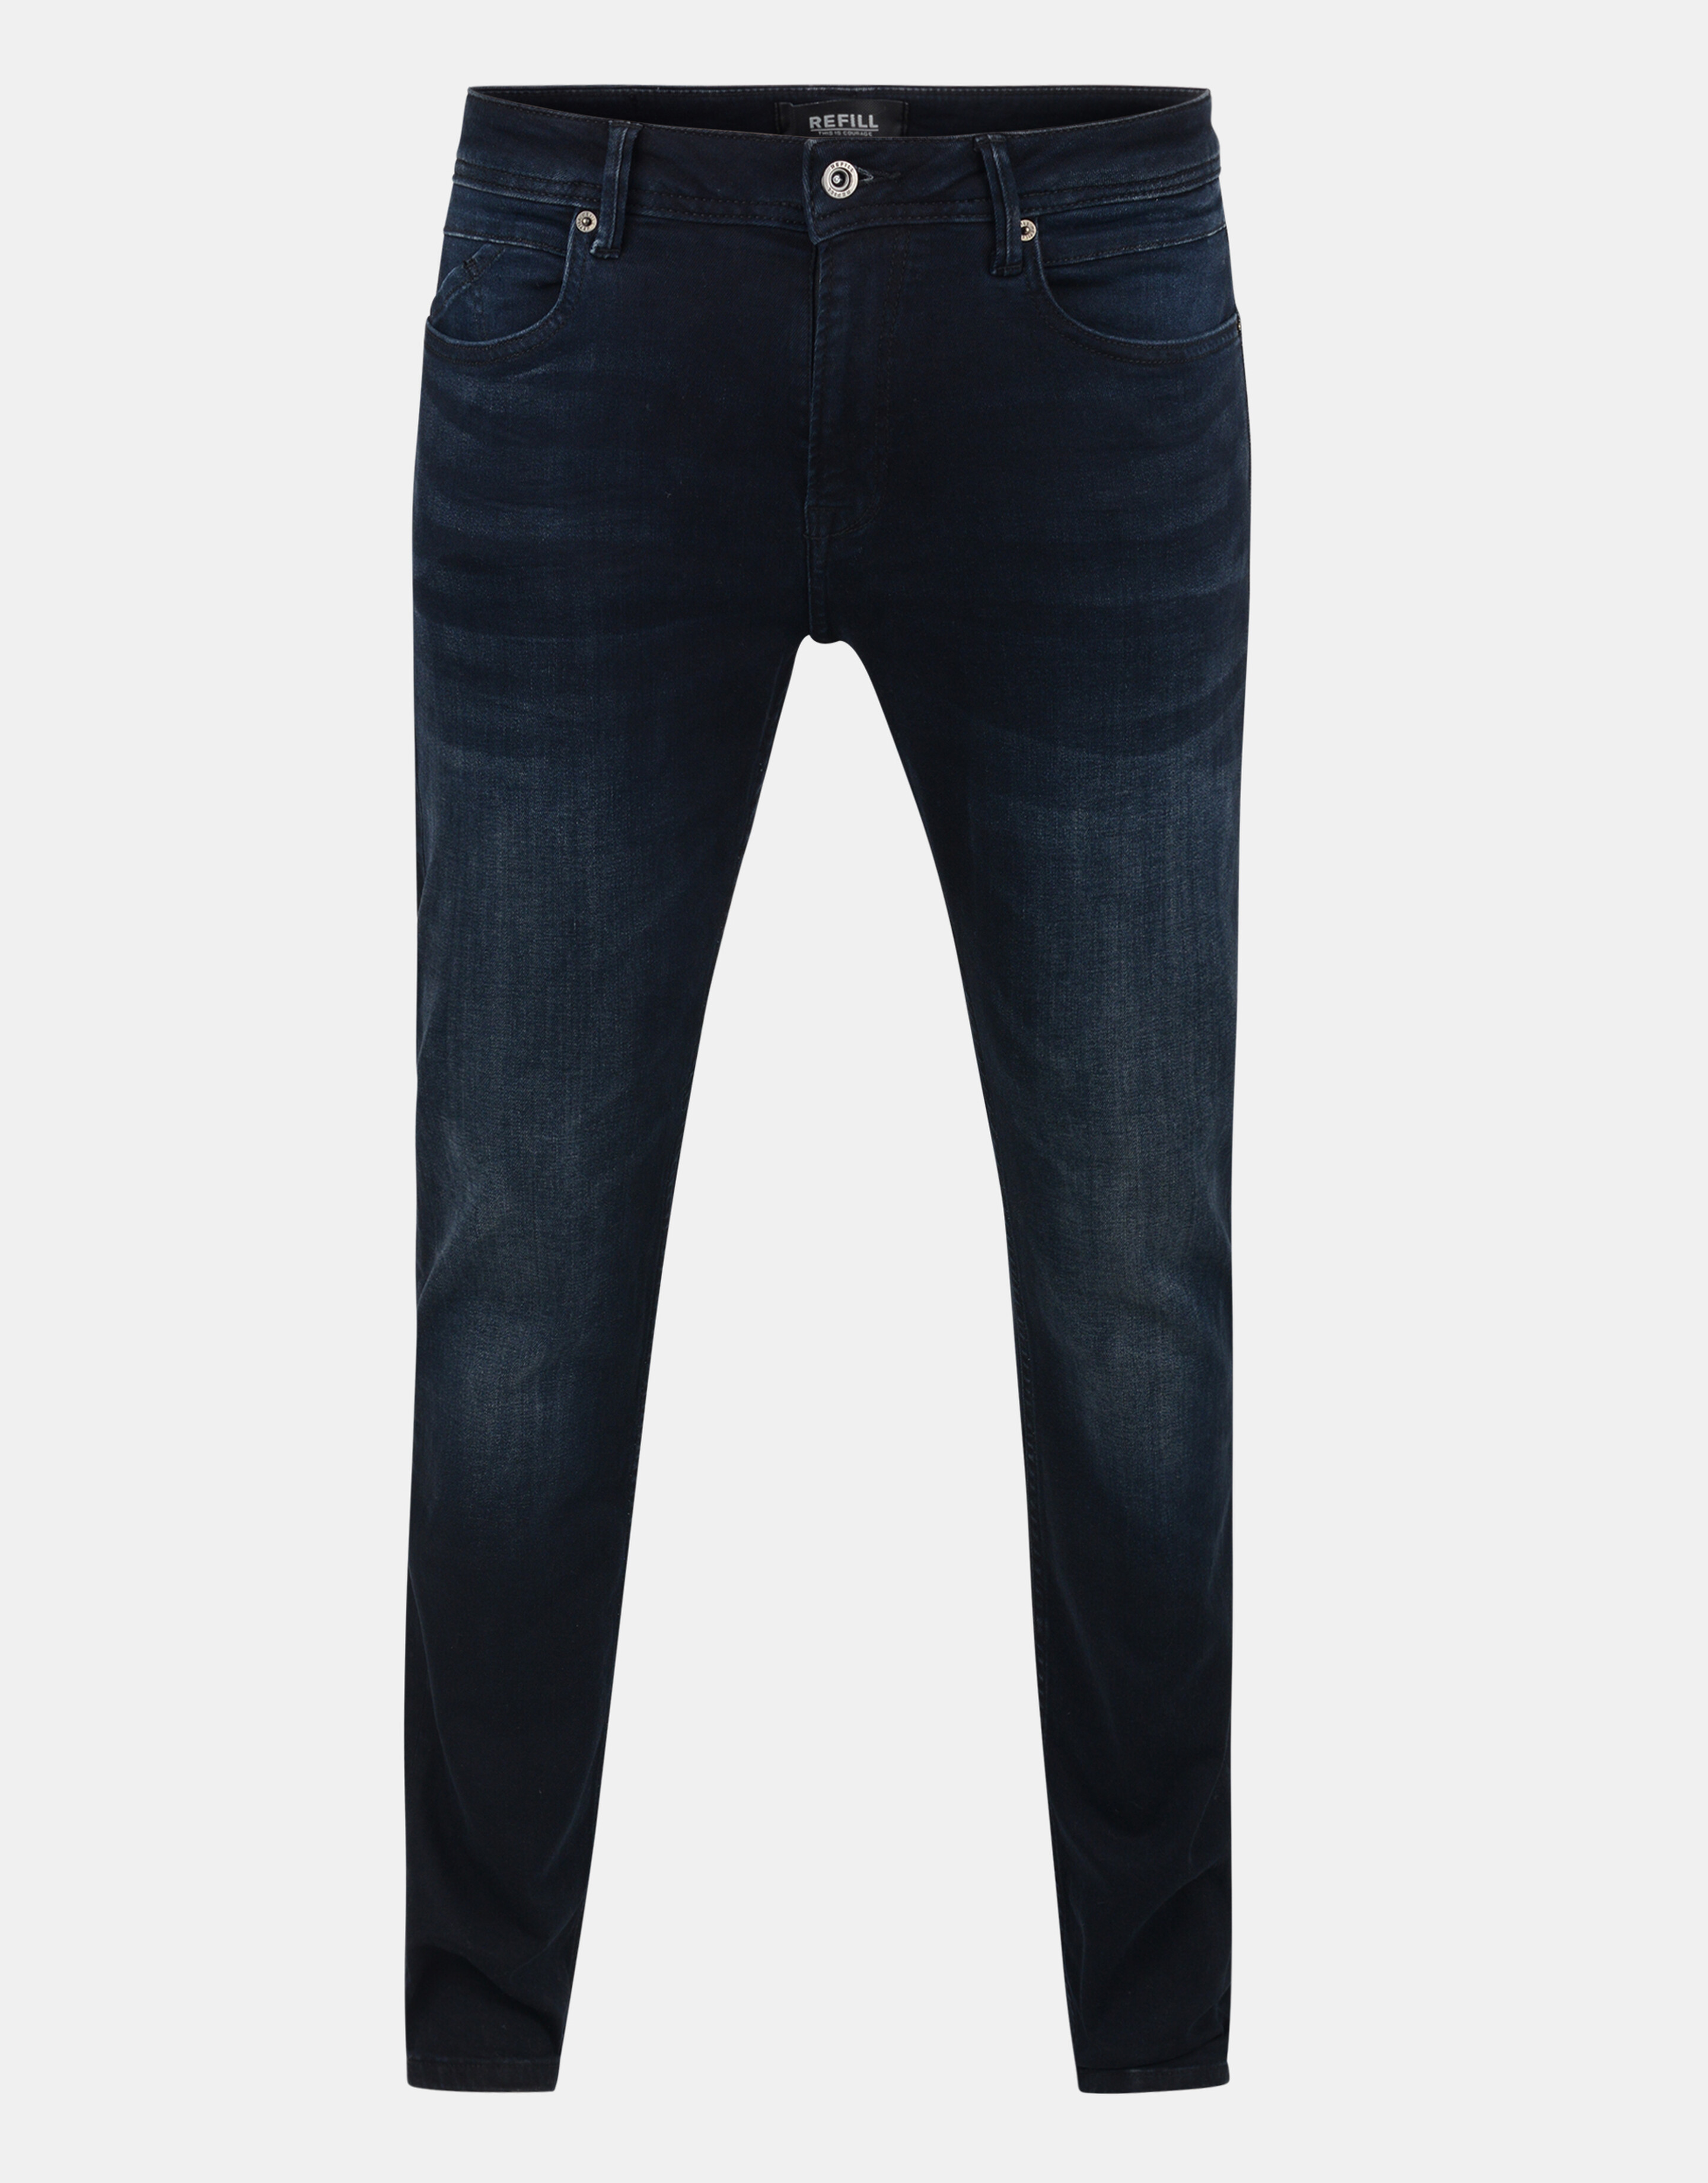 Lewis Straight Blau/Schwarz Jeans L32 Refill